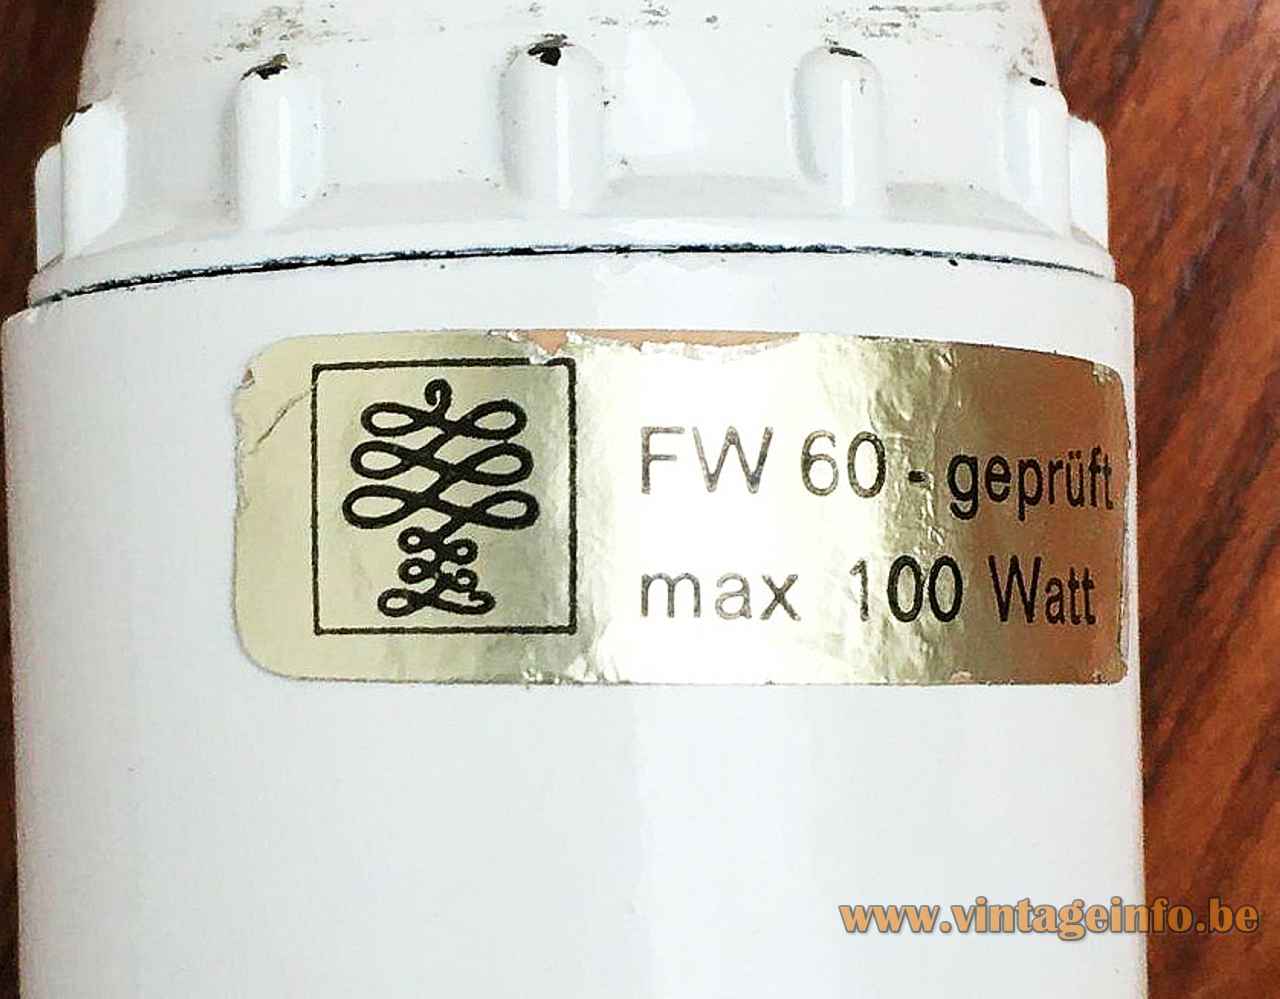 Goldkant Cocoon pendant lamp gold coloured paper label logo Goldkant Leuchten maximum 100 watt FW 60 geprüft